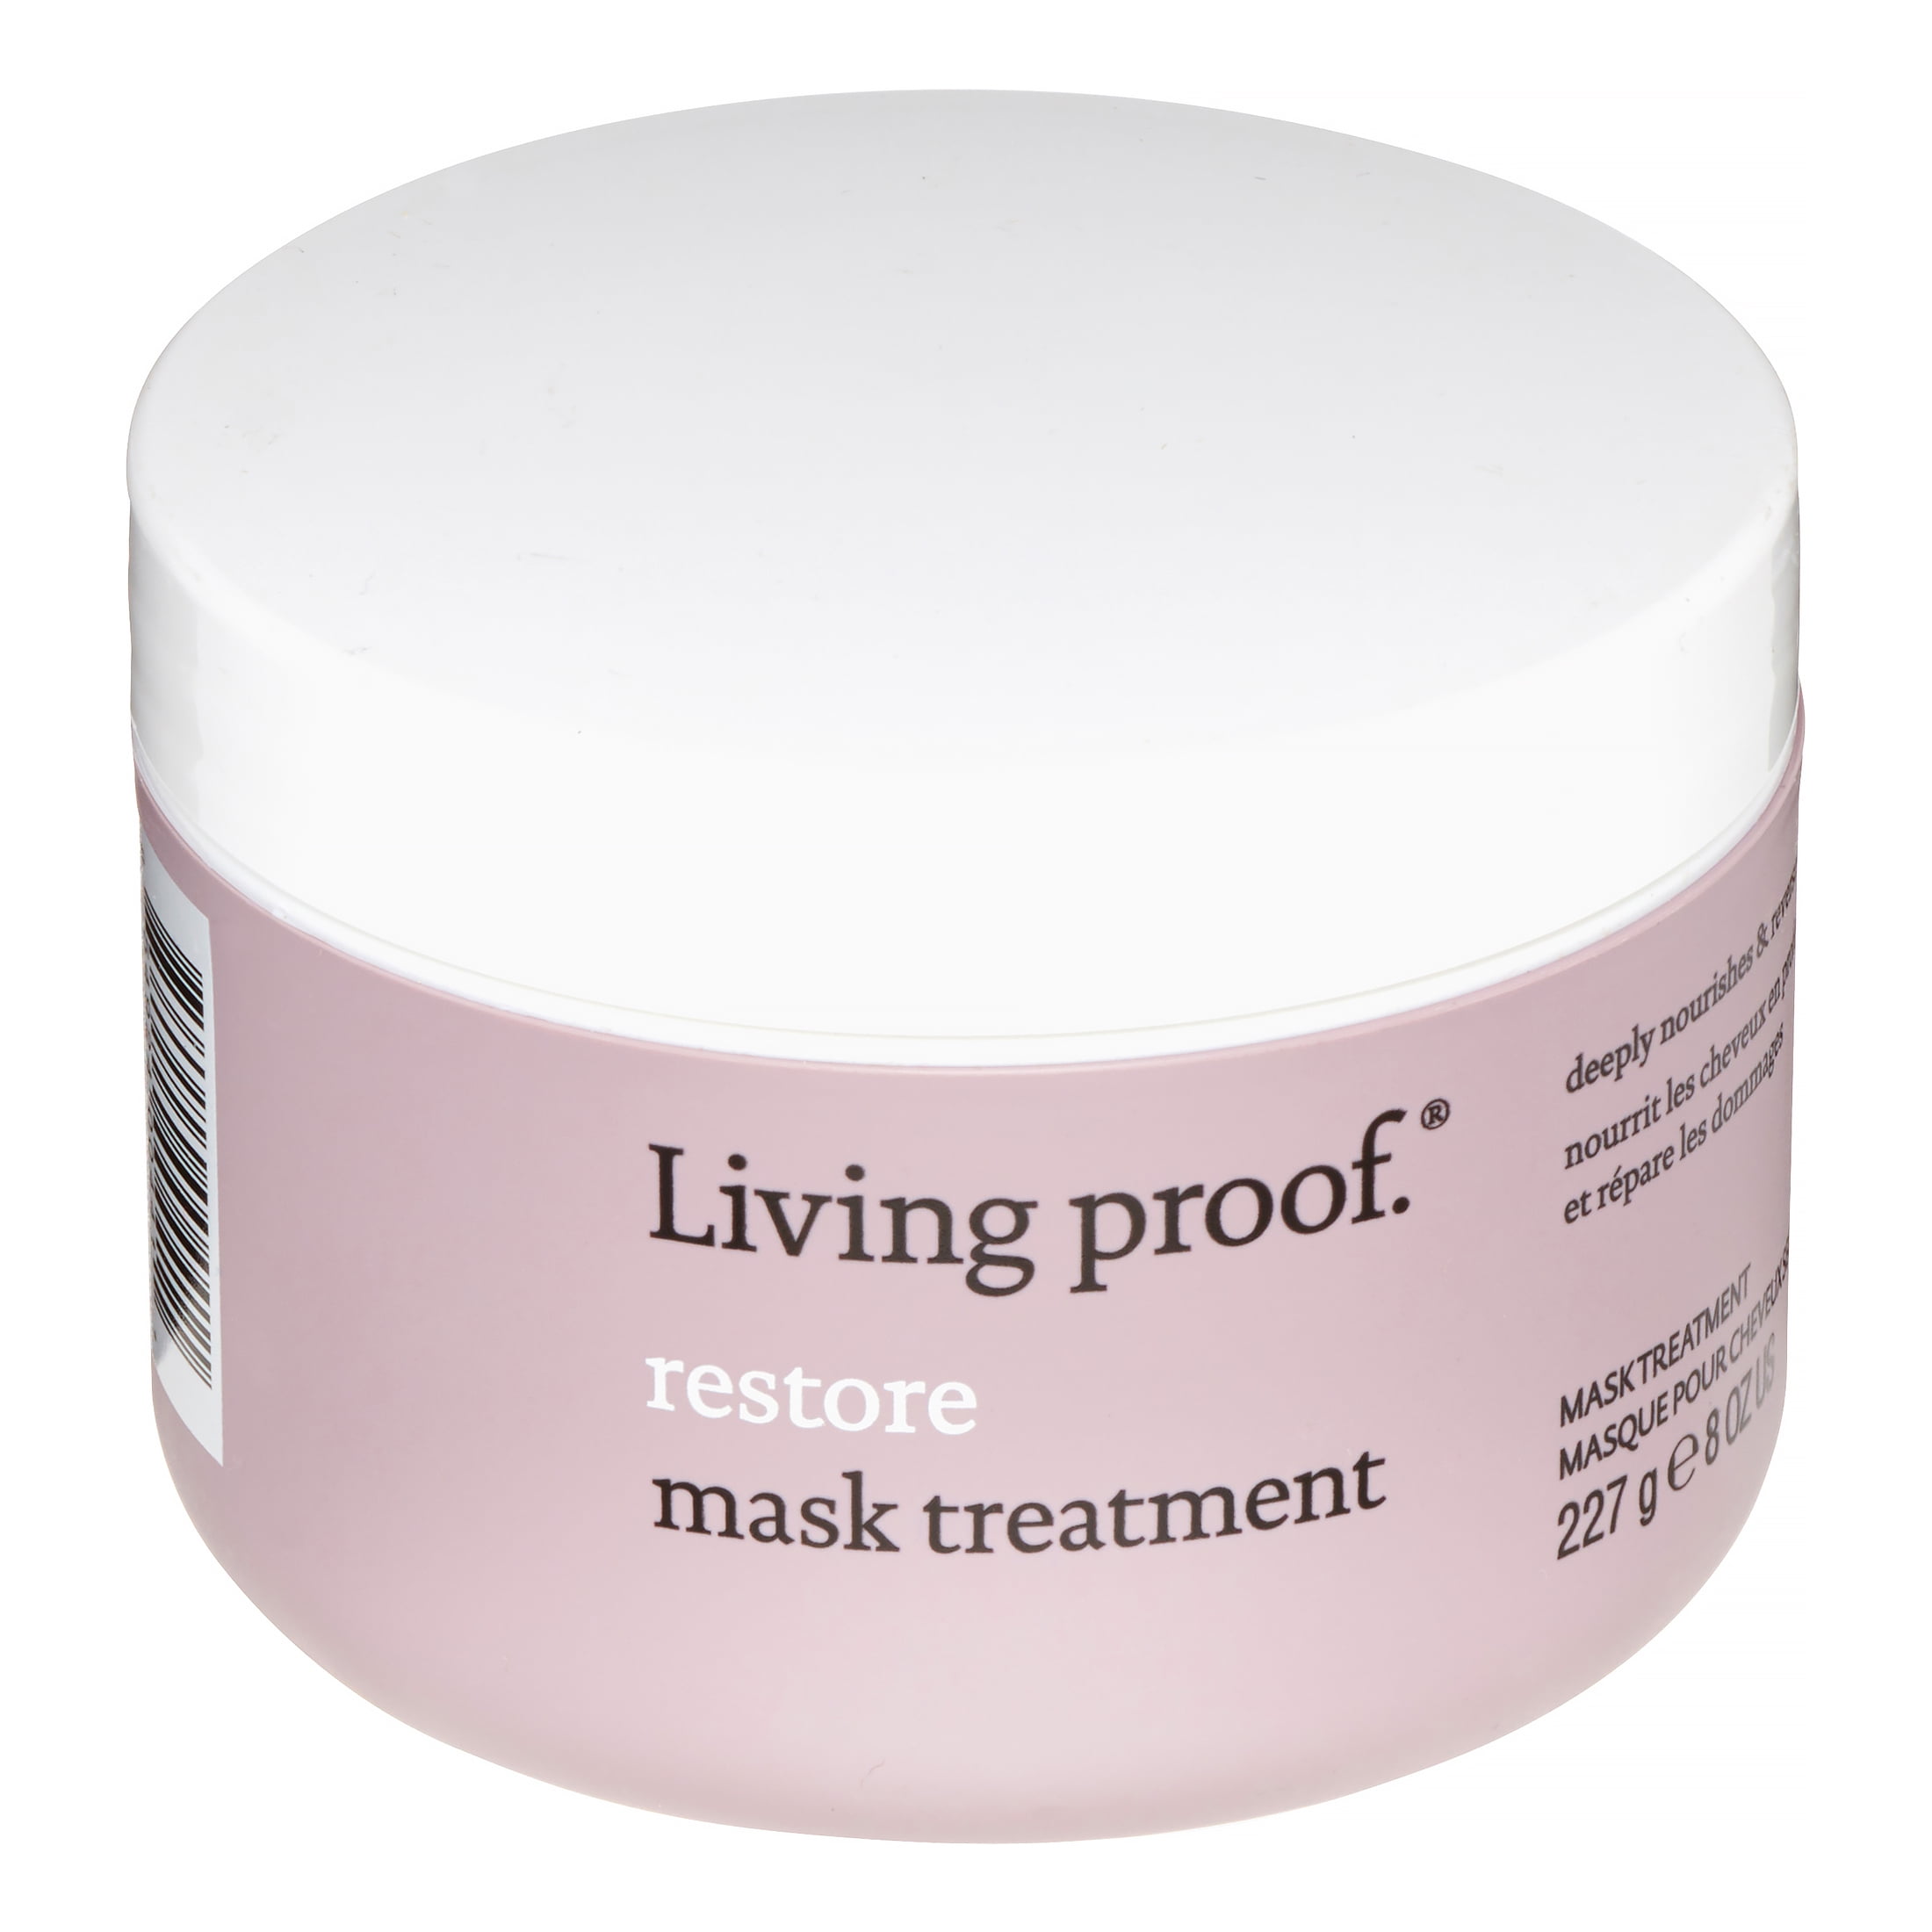 43 Value) Living Proof Mask Treatment, 8 Oz -